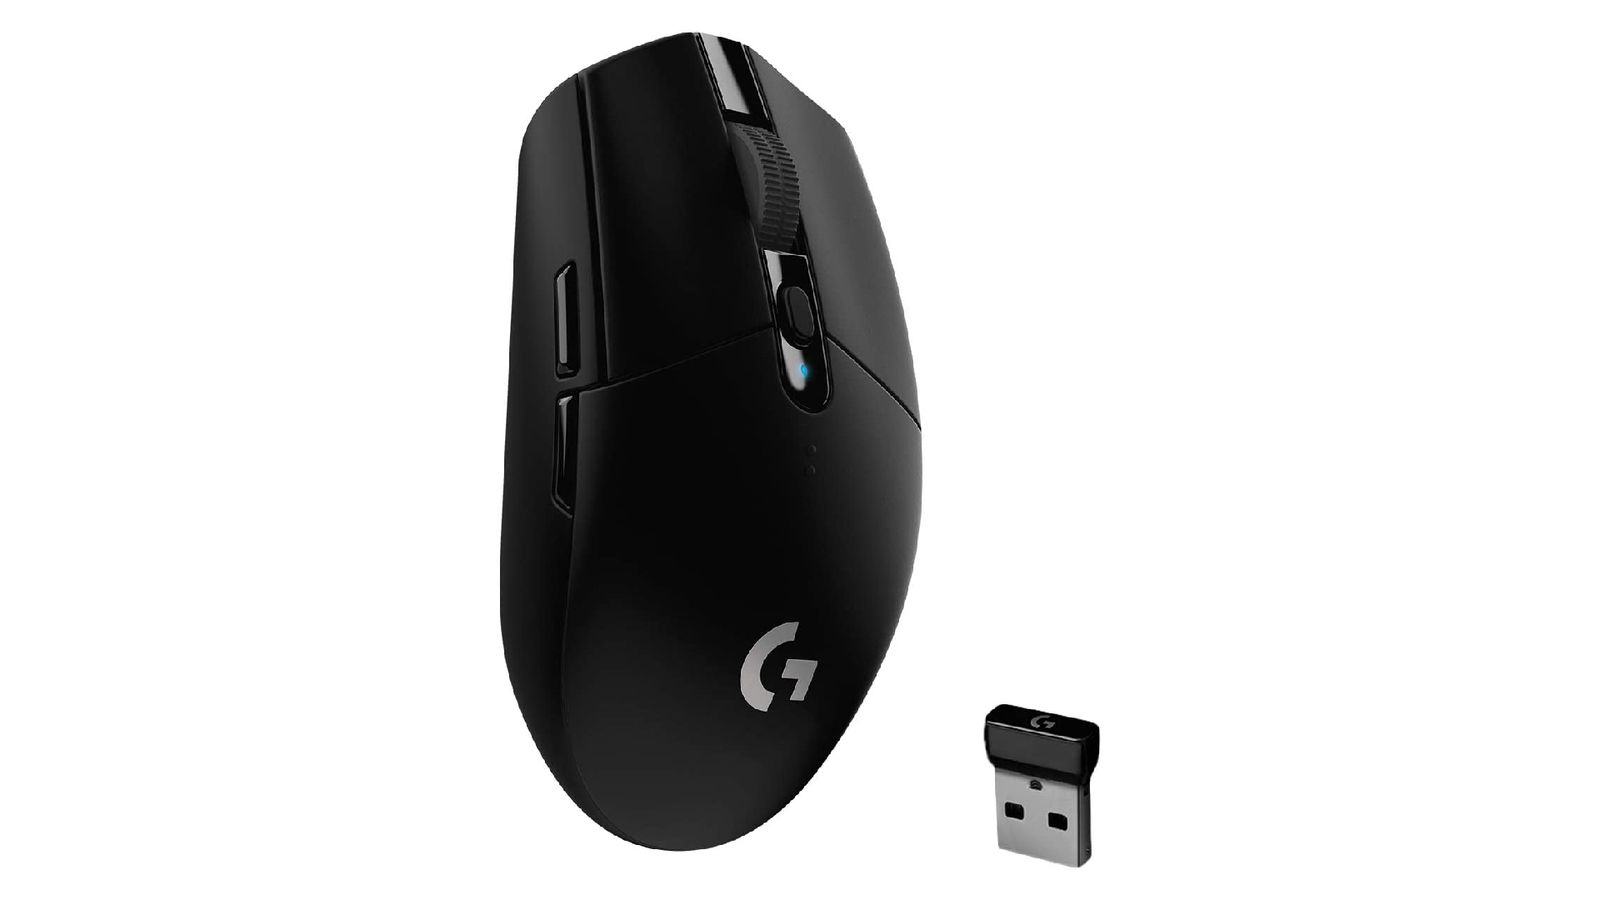 Logitech G305 Lightspeed product image of a black wireless mouse featuring a grey Logitech logo next to a USB stick.